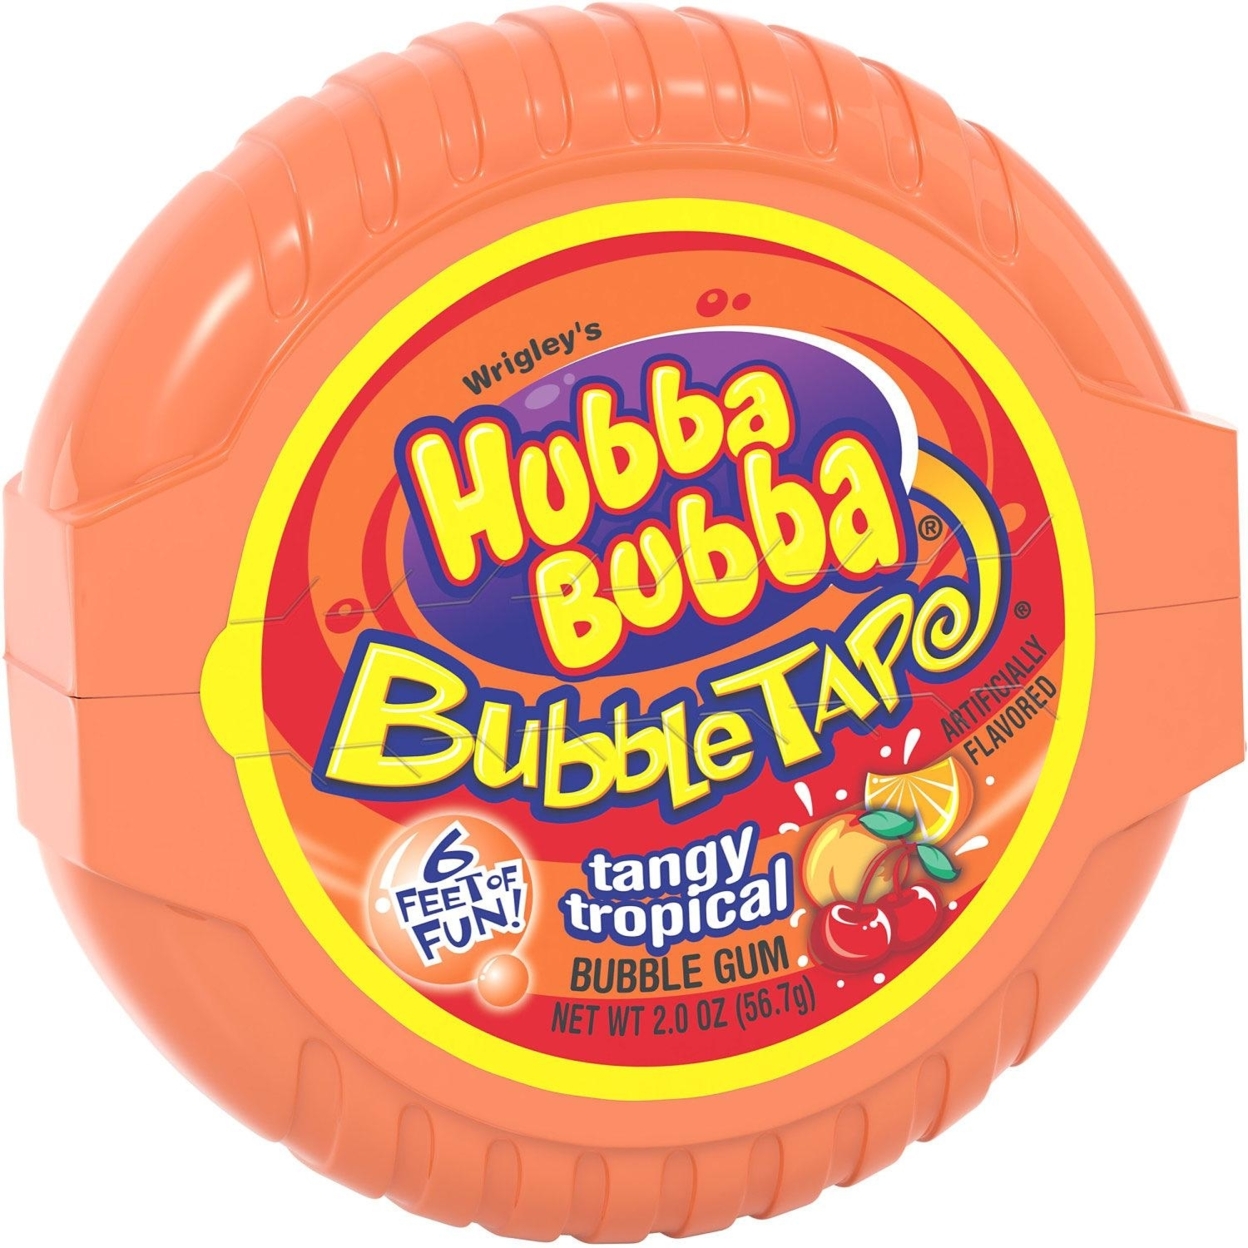 Hubba Bubba Bubble Tape Asst. - 12 Pack